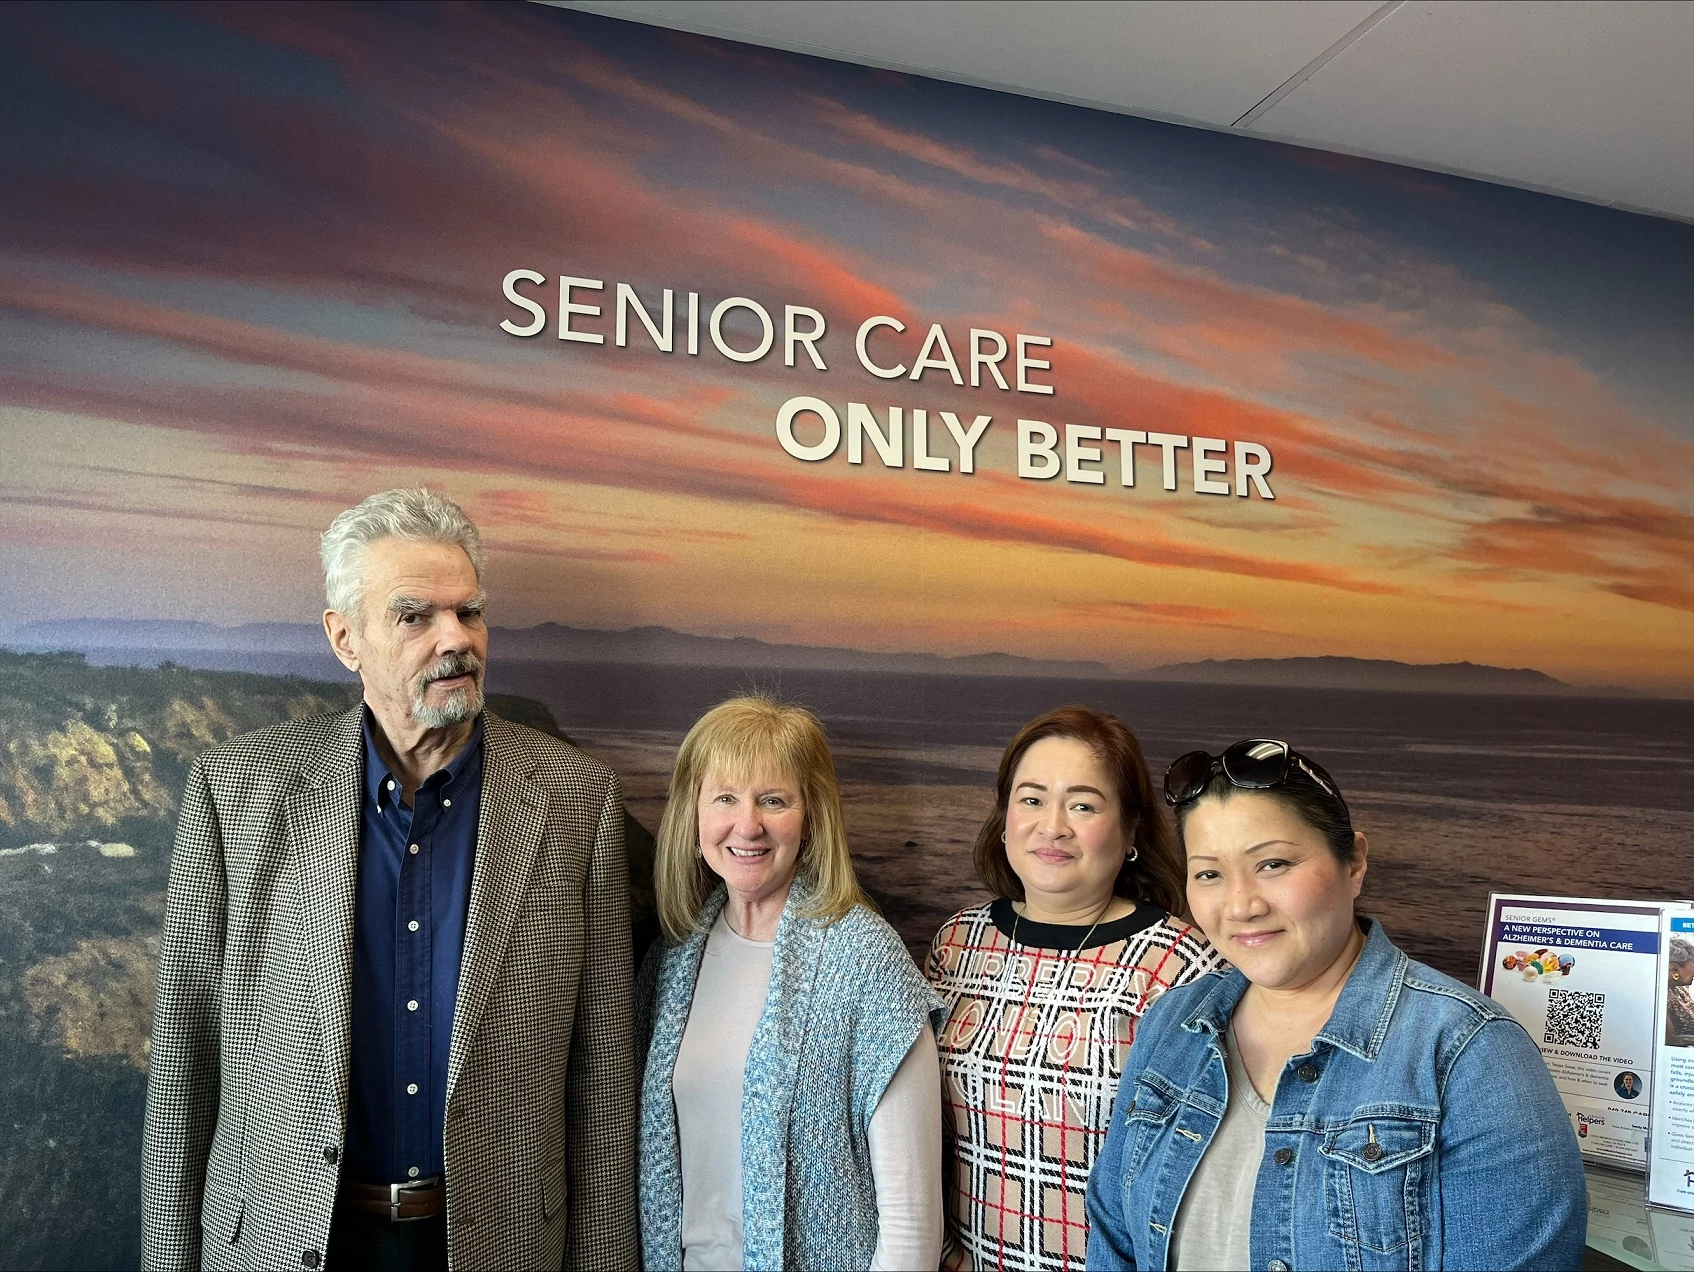 Meet our newest Care Partners servicing the Irvine, Lake Forest, Laguna Hills, and Laguna Woods communities – Peter, Vikki, Cristina, & Sok